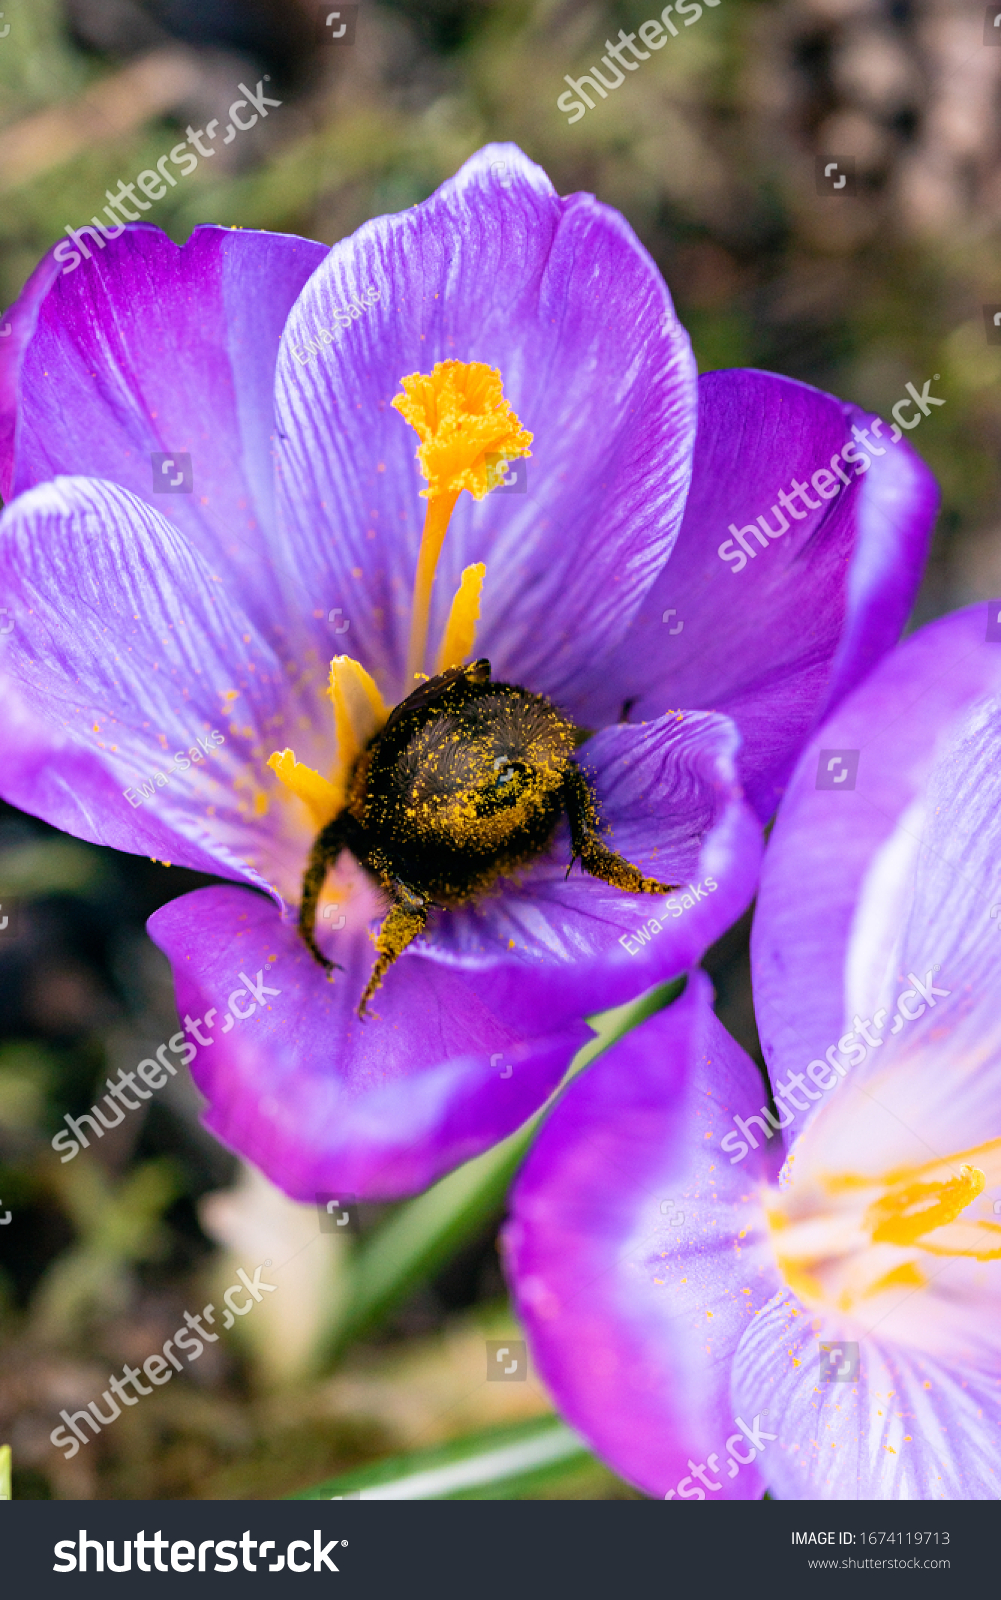 Bumble bee booty